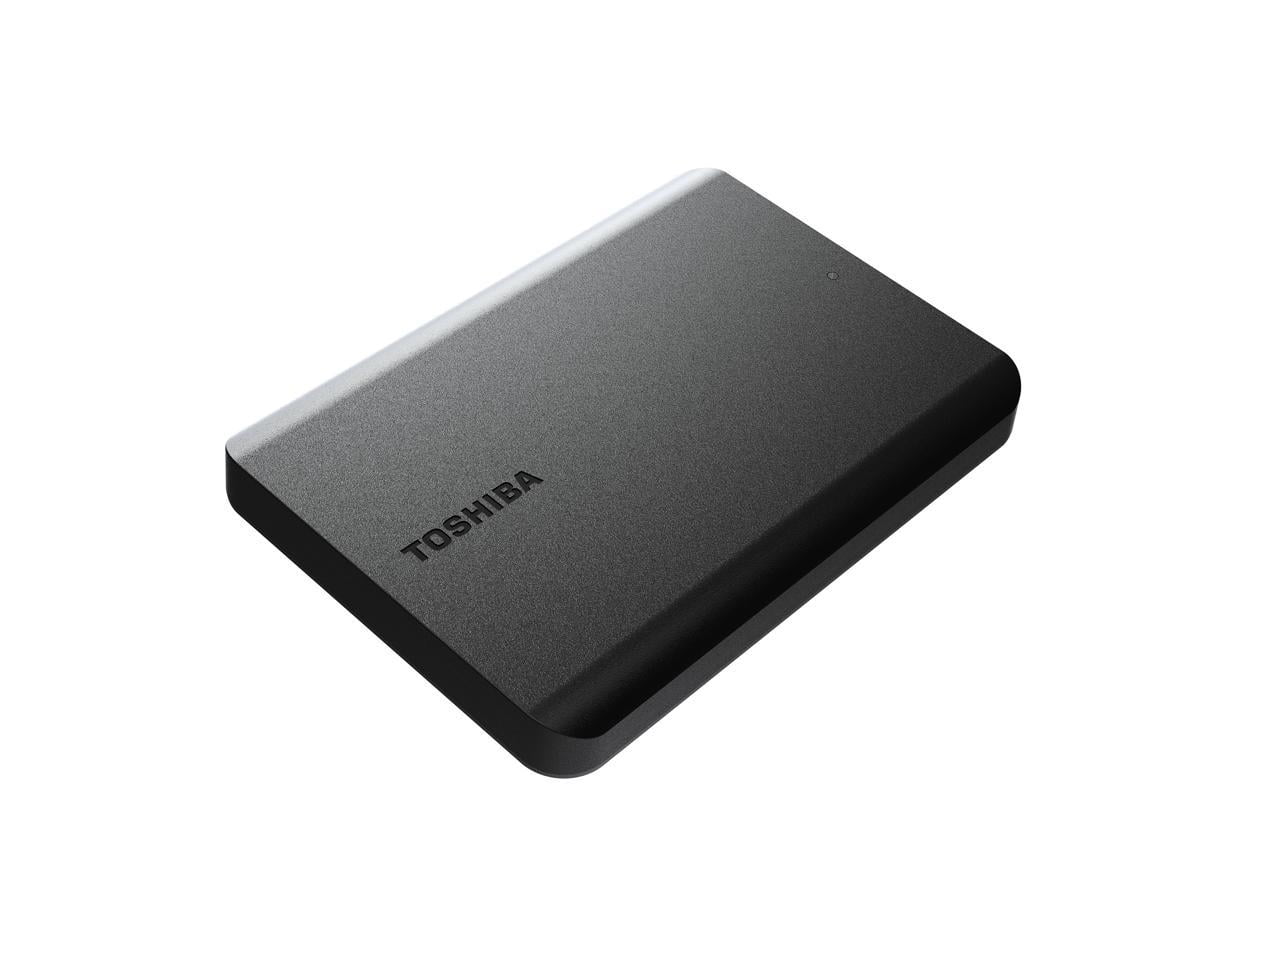 Make your life Easy-EXTERNAL PORTABLE HARD DRIVE Toshiba Canvio Basics 4TB  USB 3.0 - HDTB540XK3CA 